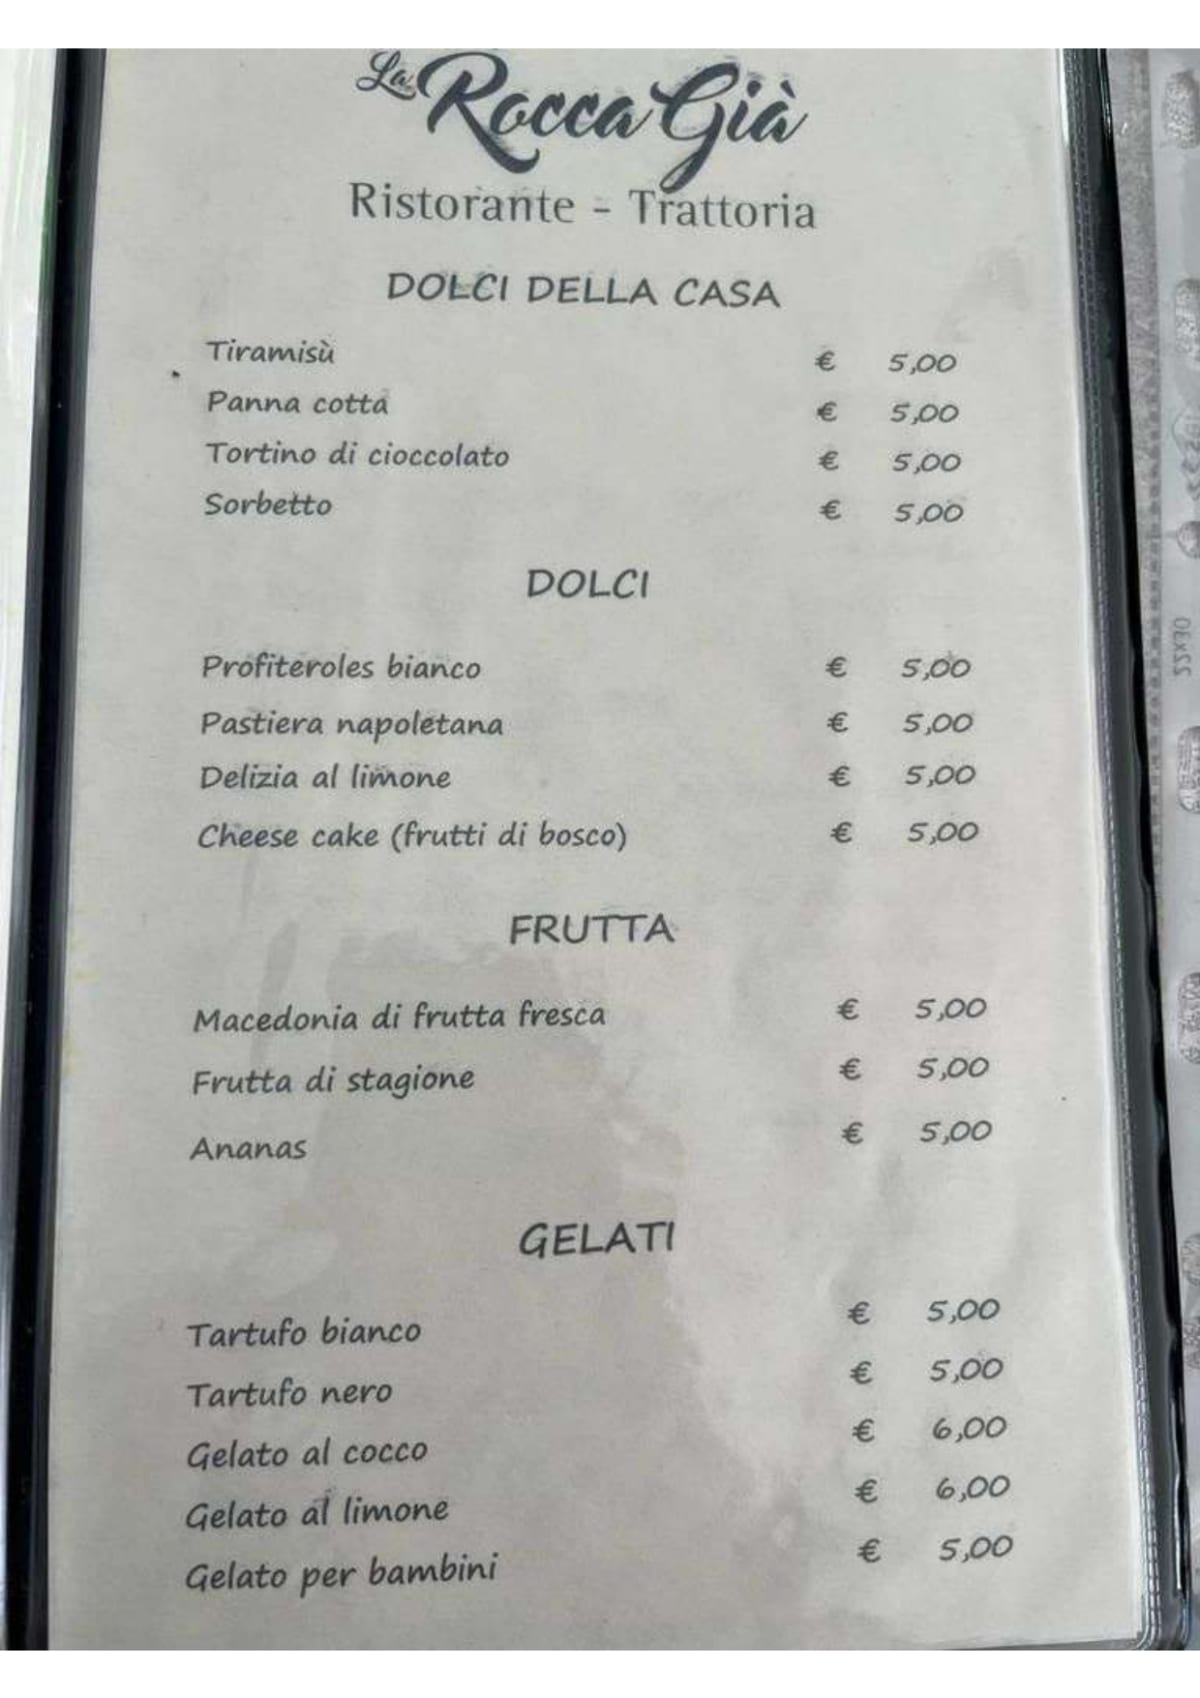 La Rocca Già menu